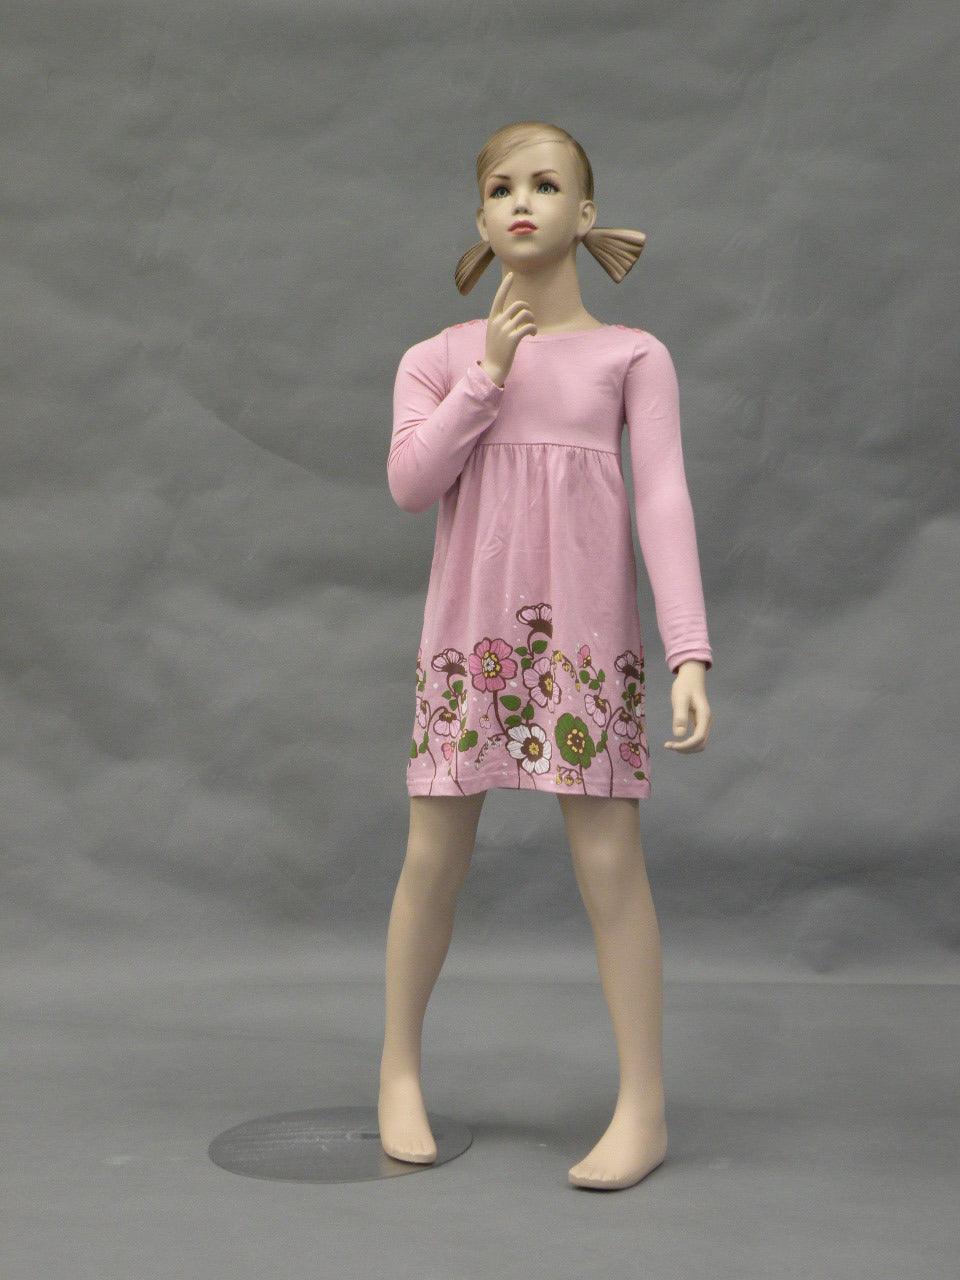 Realistic Child Mannequin MM-ITA1 - Mannequin Mall